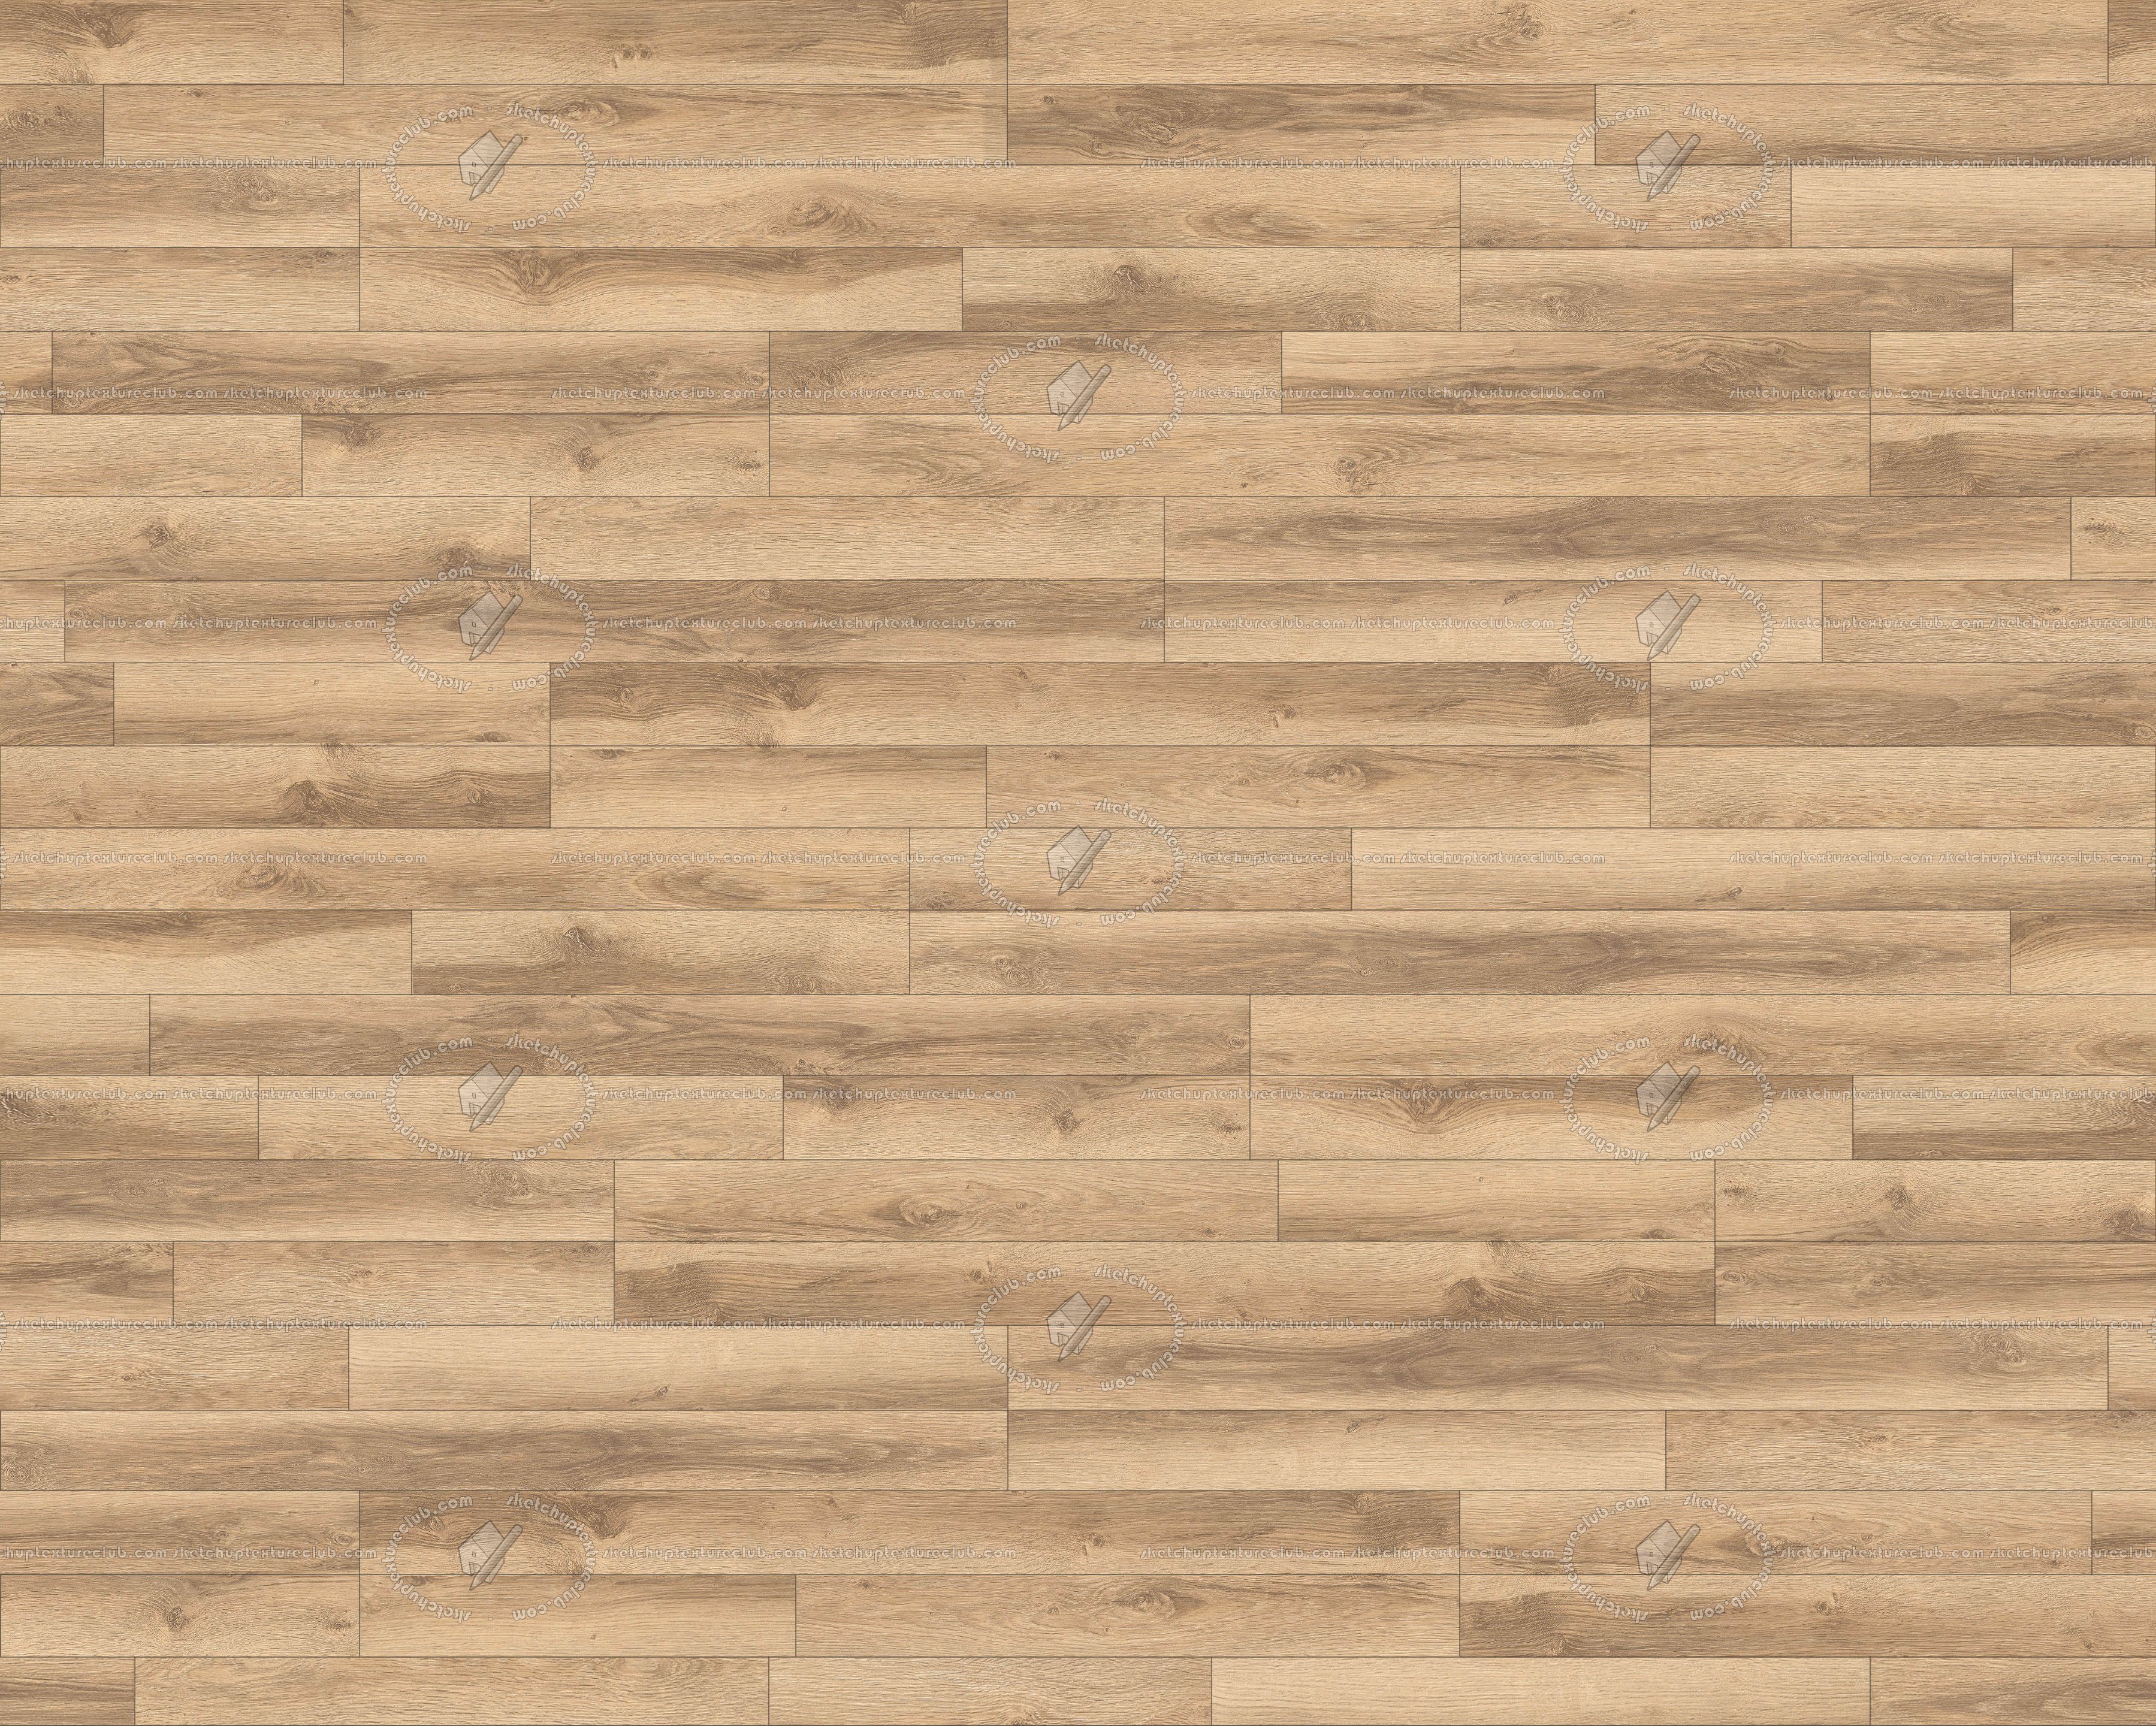 Free Textures Package 2018 00052, Wood Laminate Floor Texture